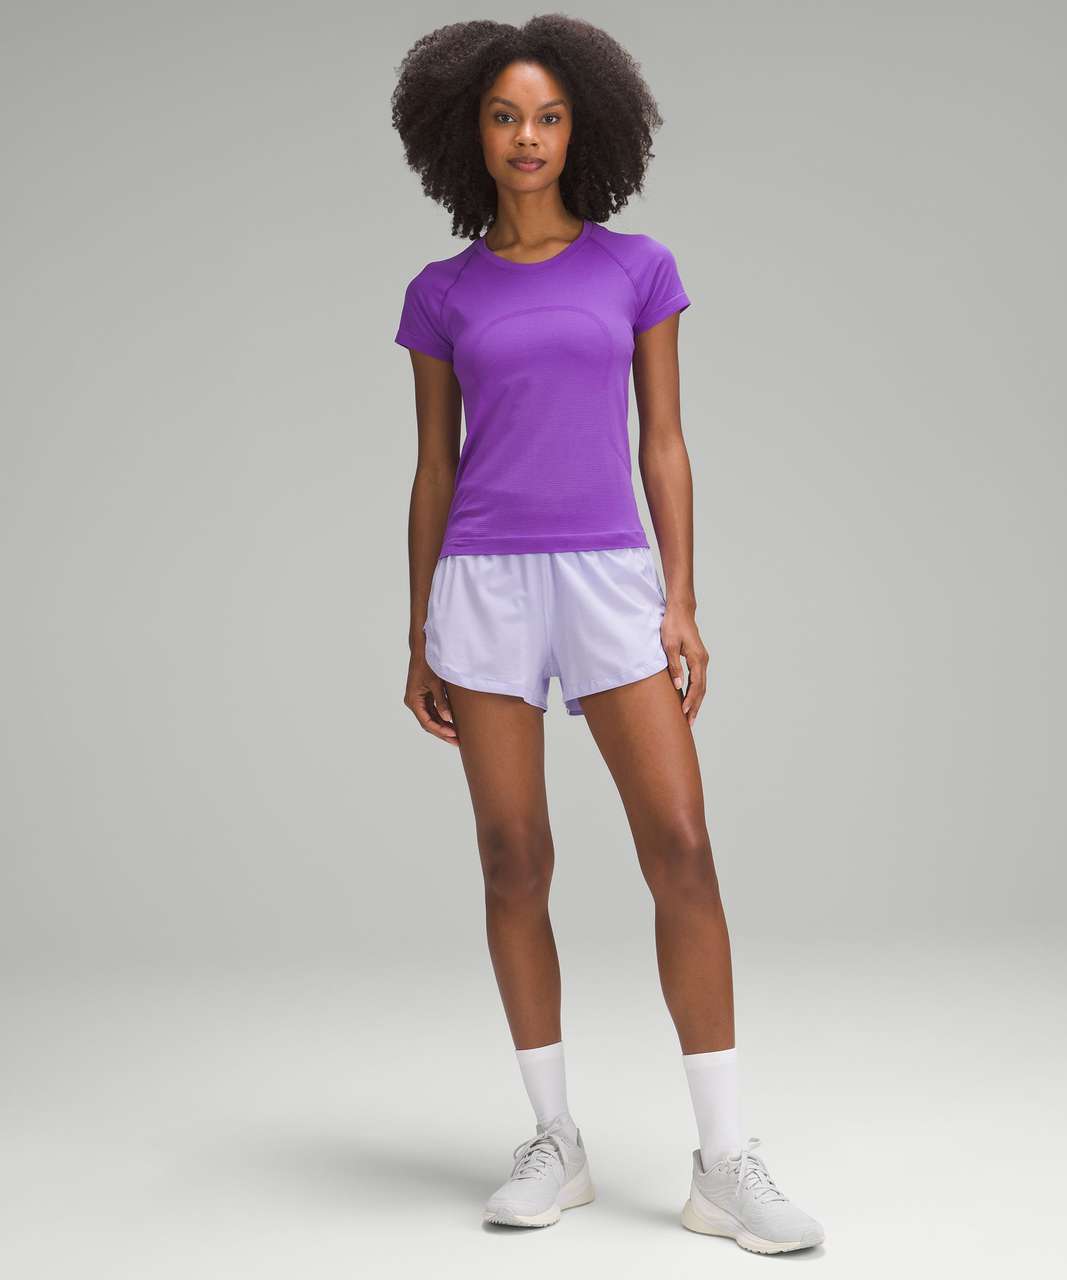 Lululemon Swiftly Tech Short-Sleeve Shirt 2.0 *Race Length - Atomic Purple / Atomic Purple